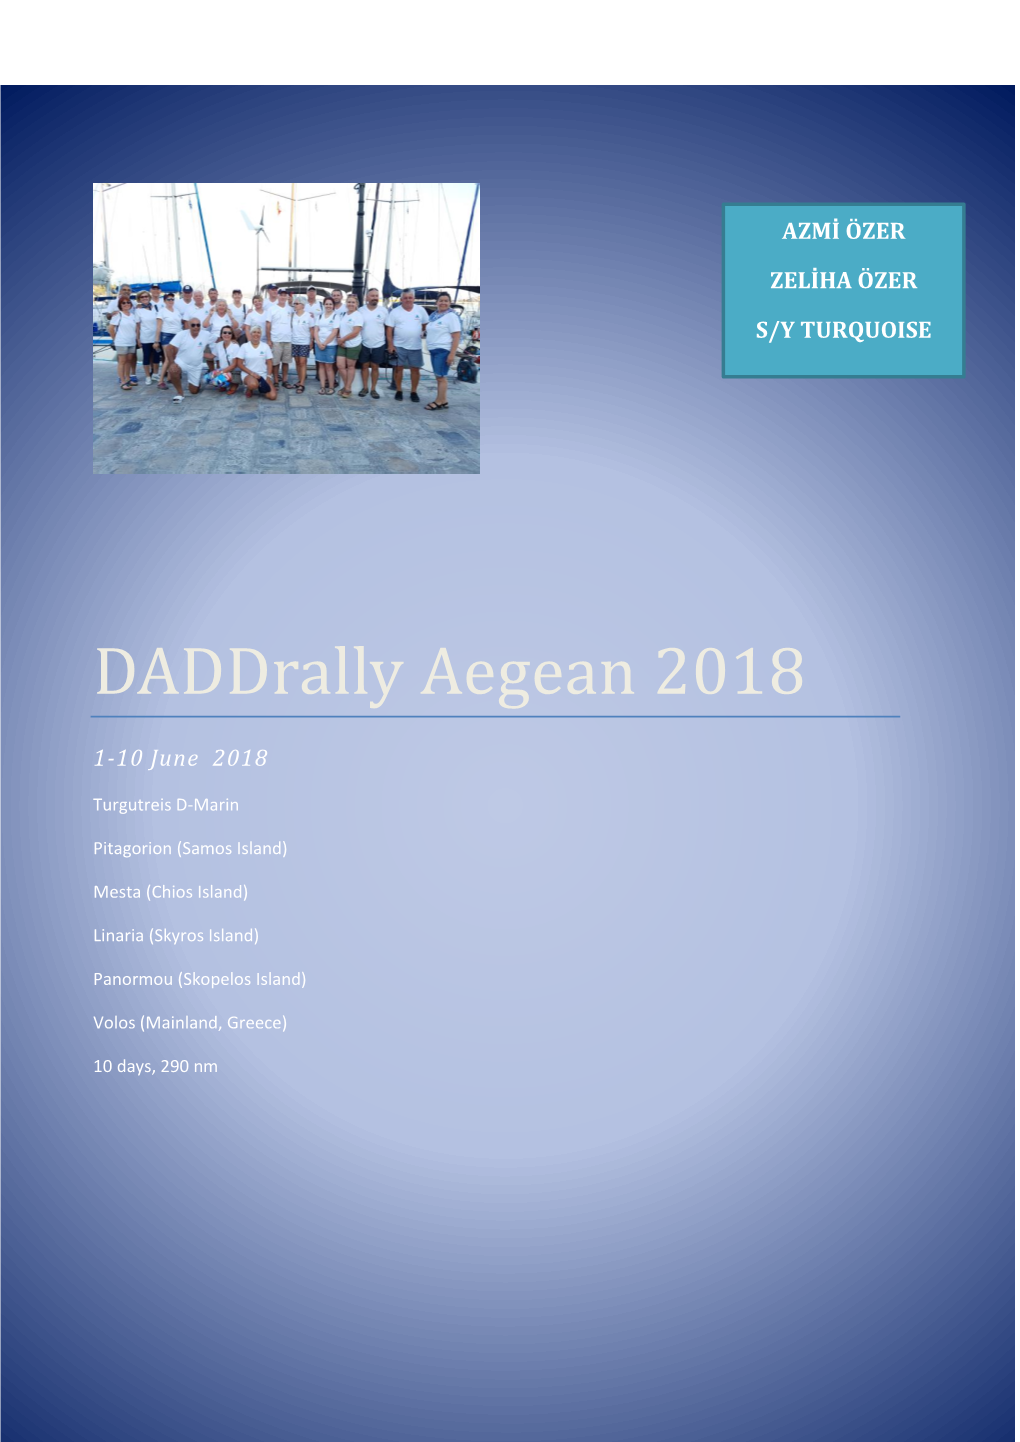 Daddrally Aegean 2018